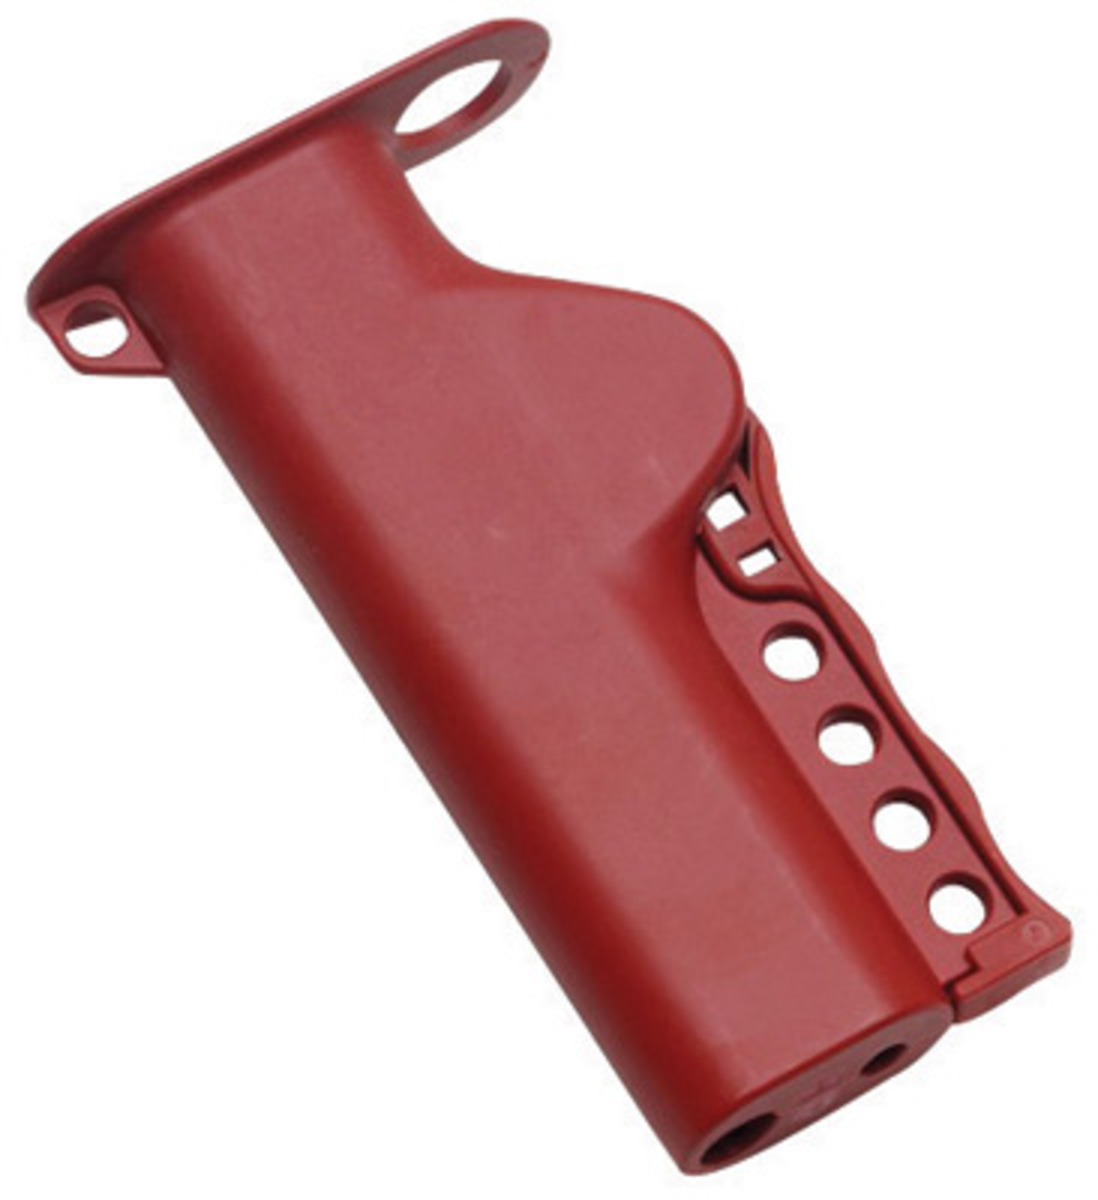 Brady® Red Reinforced Fiberglass/Polyurethane Cable Lockout